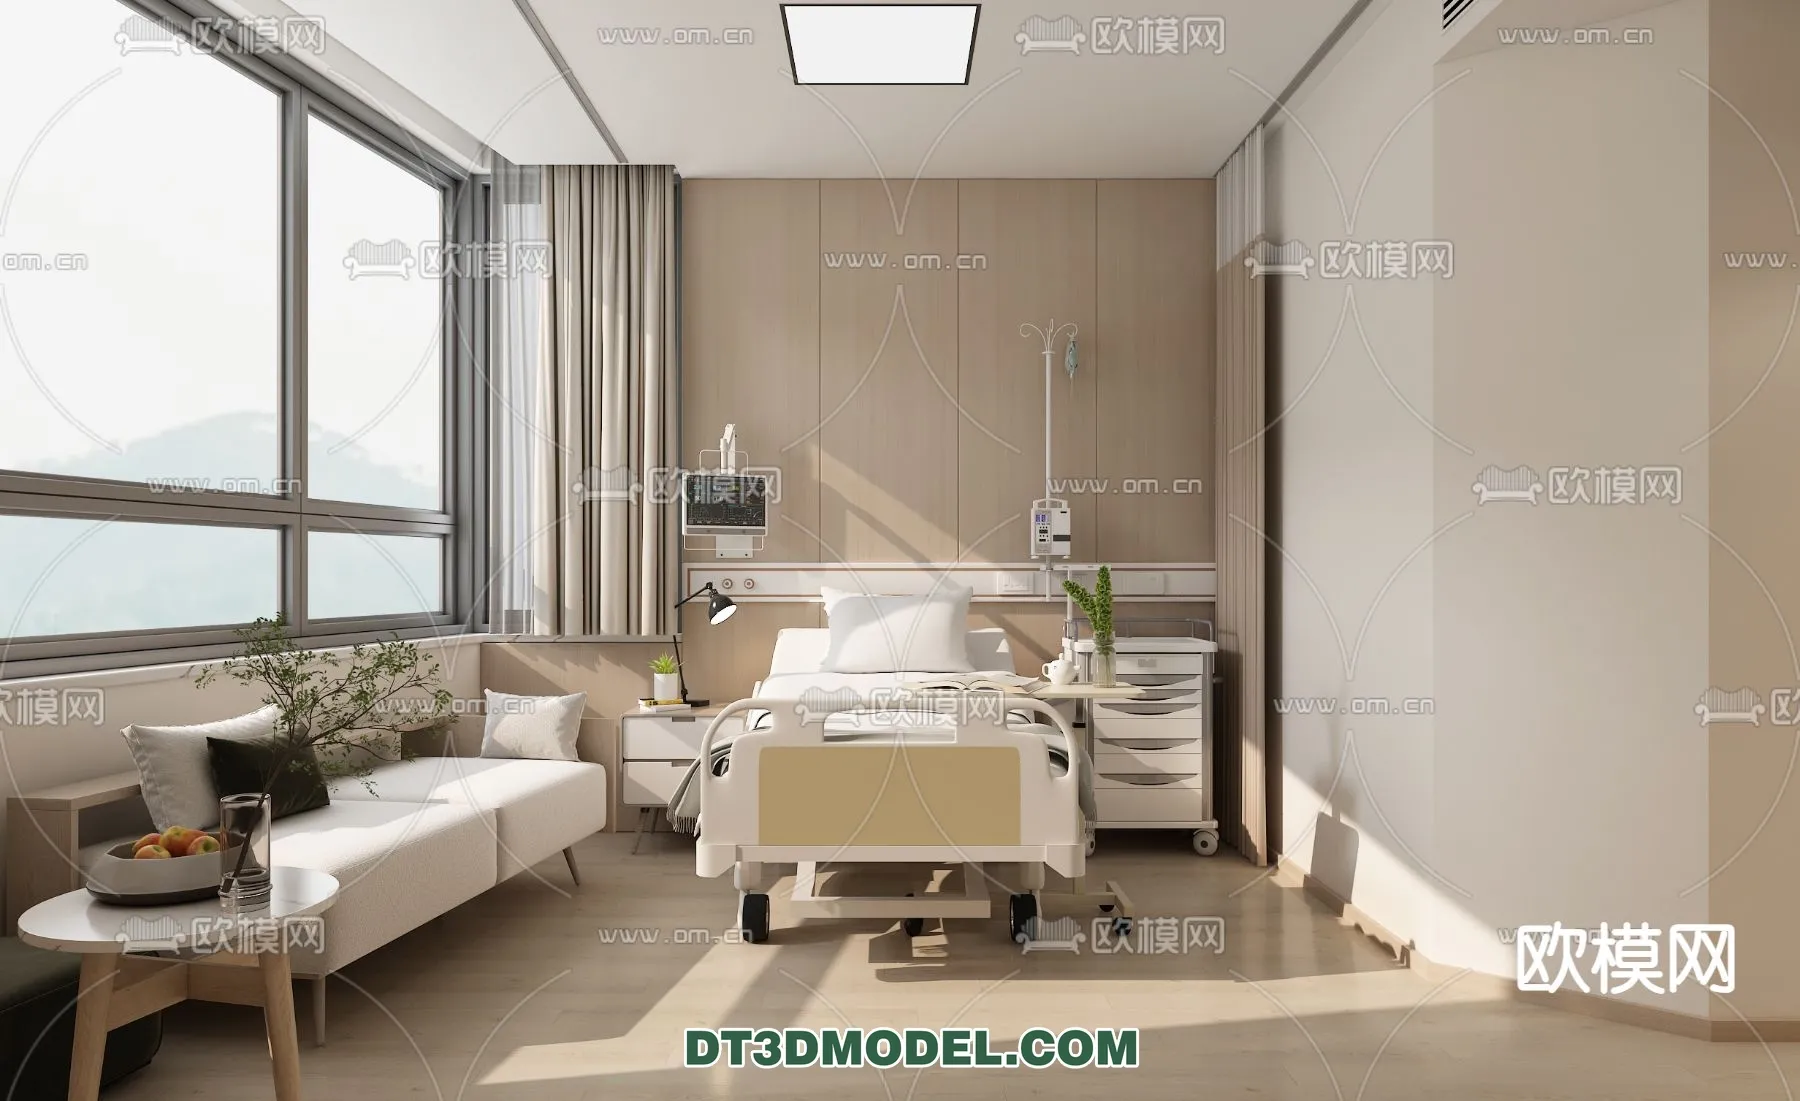 HOSPITAL 3D SCENES – MODERN – 0147